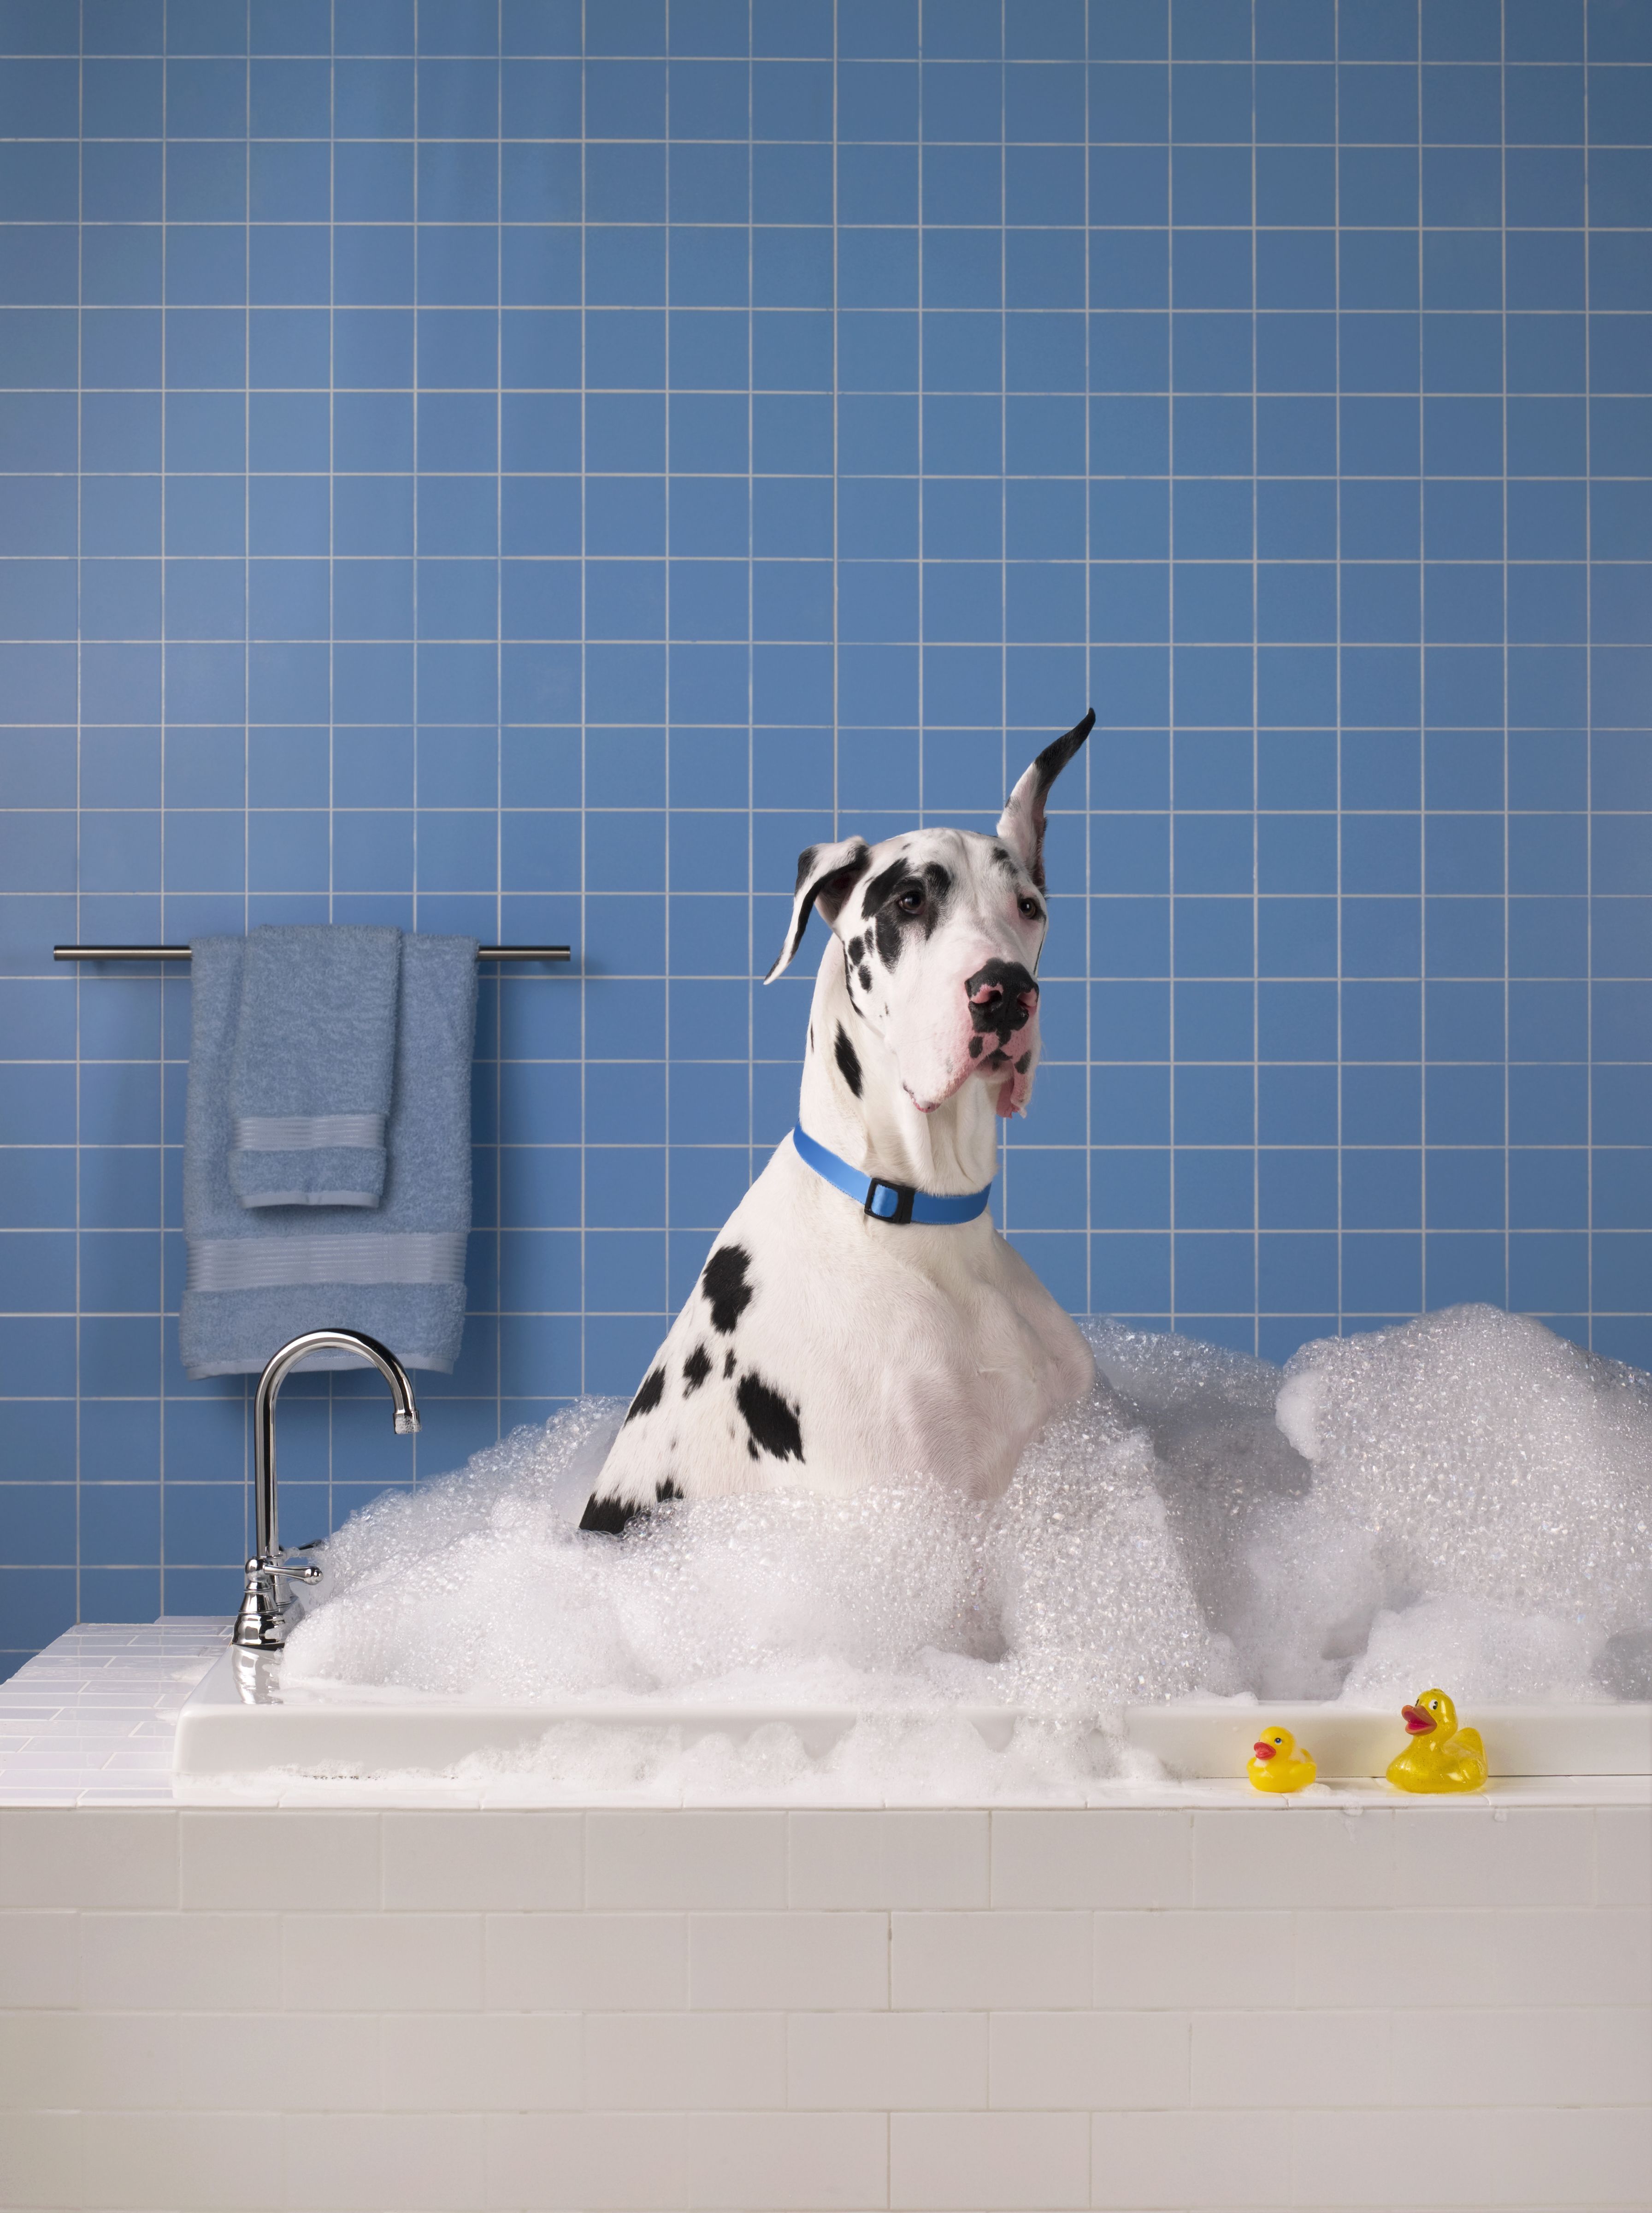 best dog shampoo for dry skin